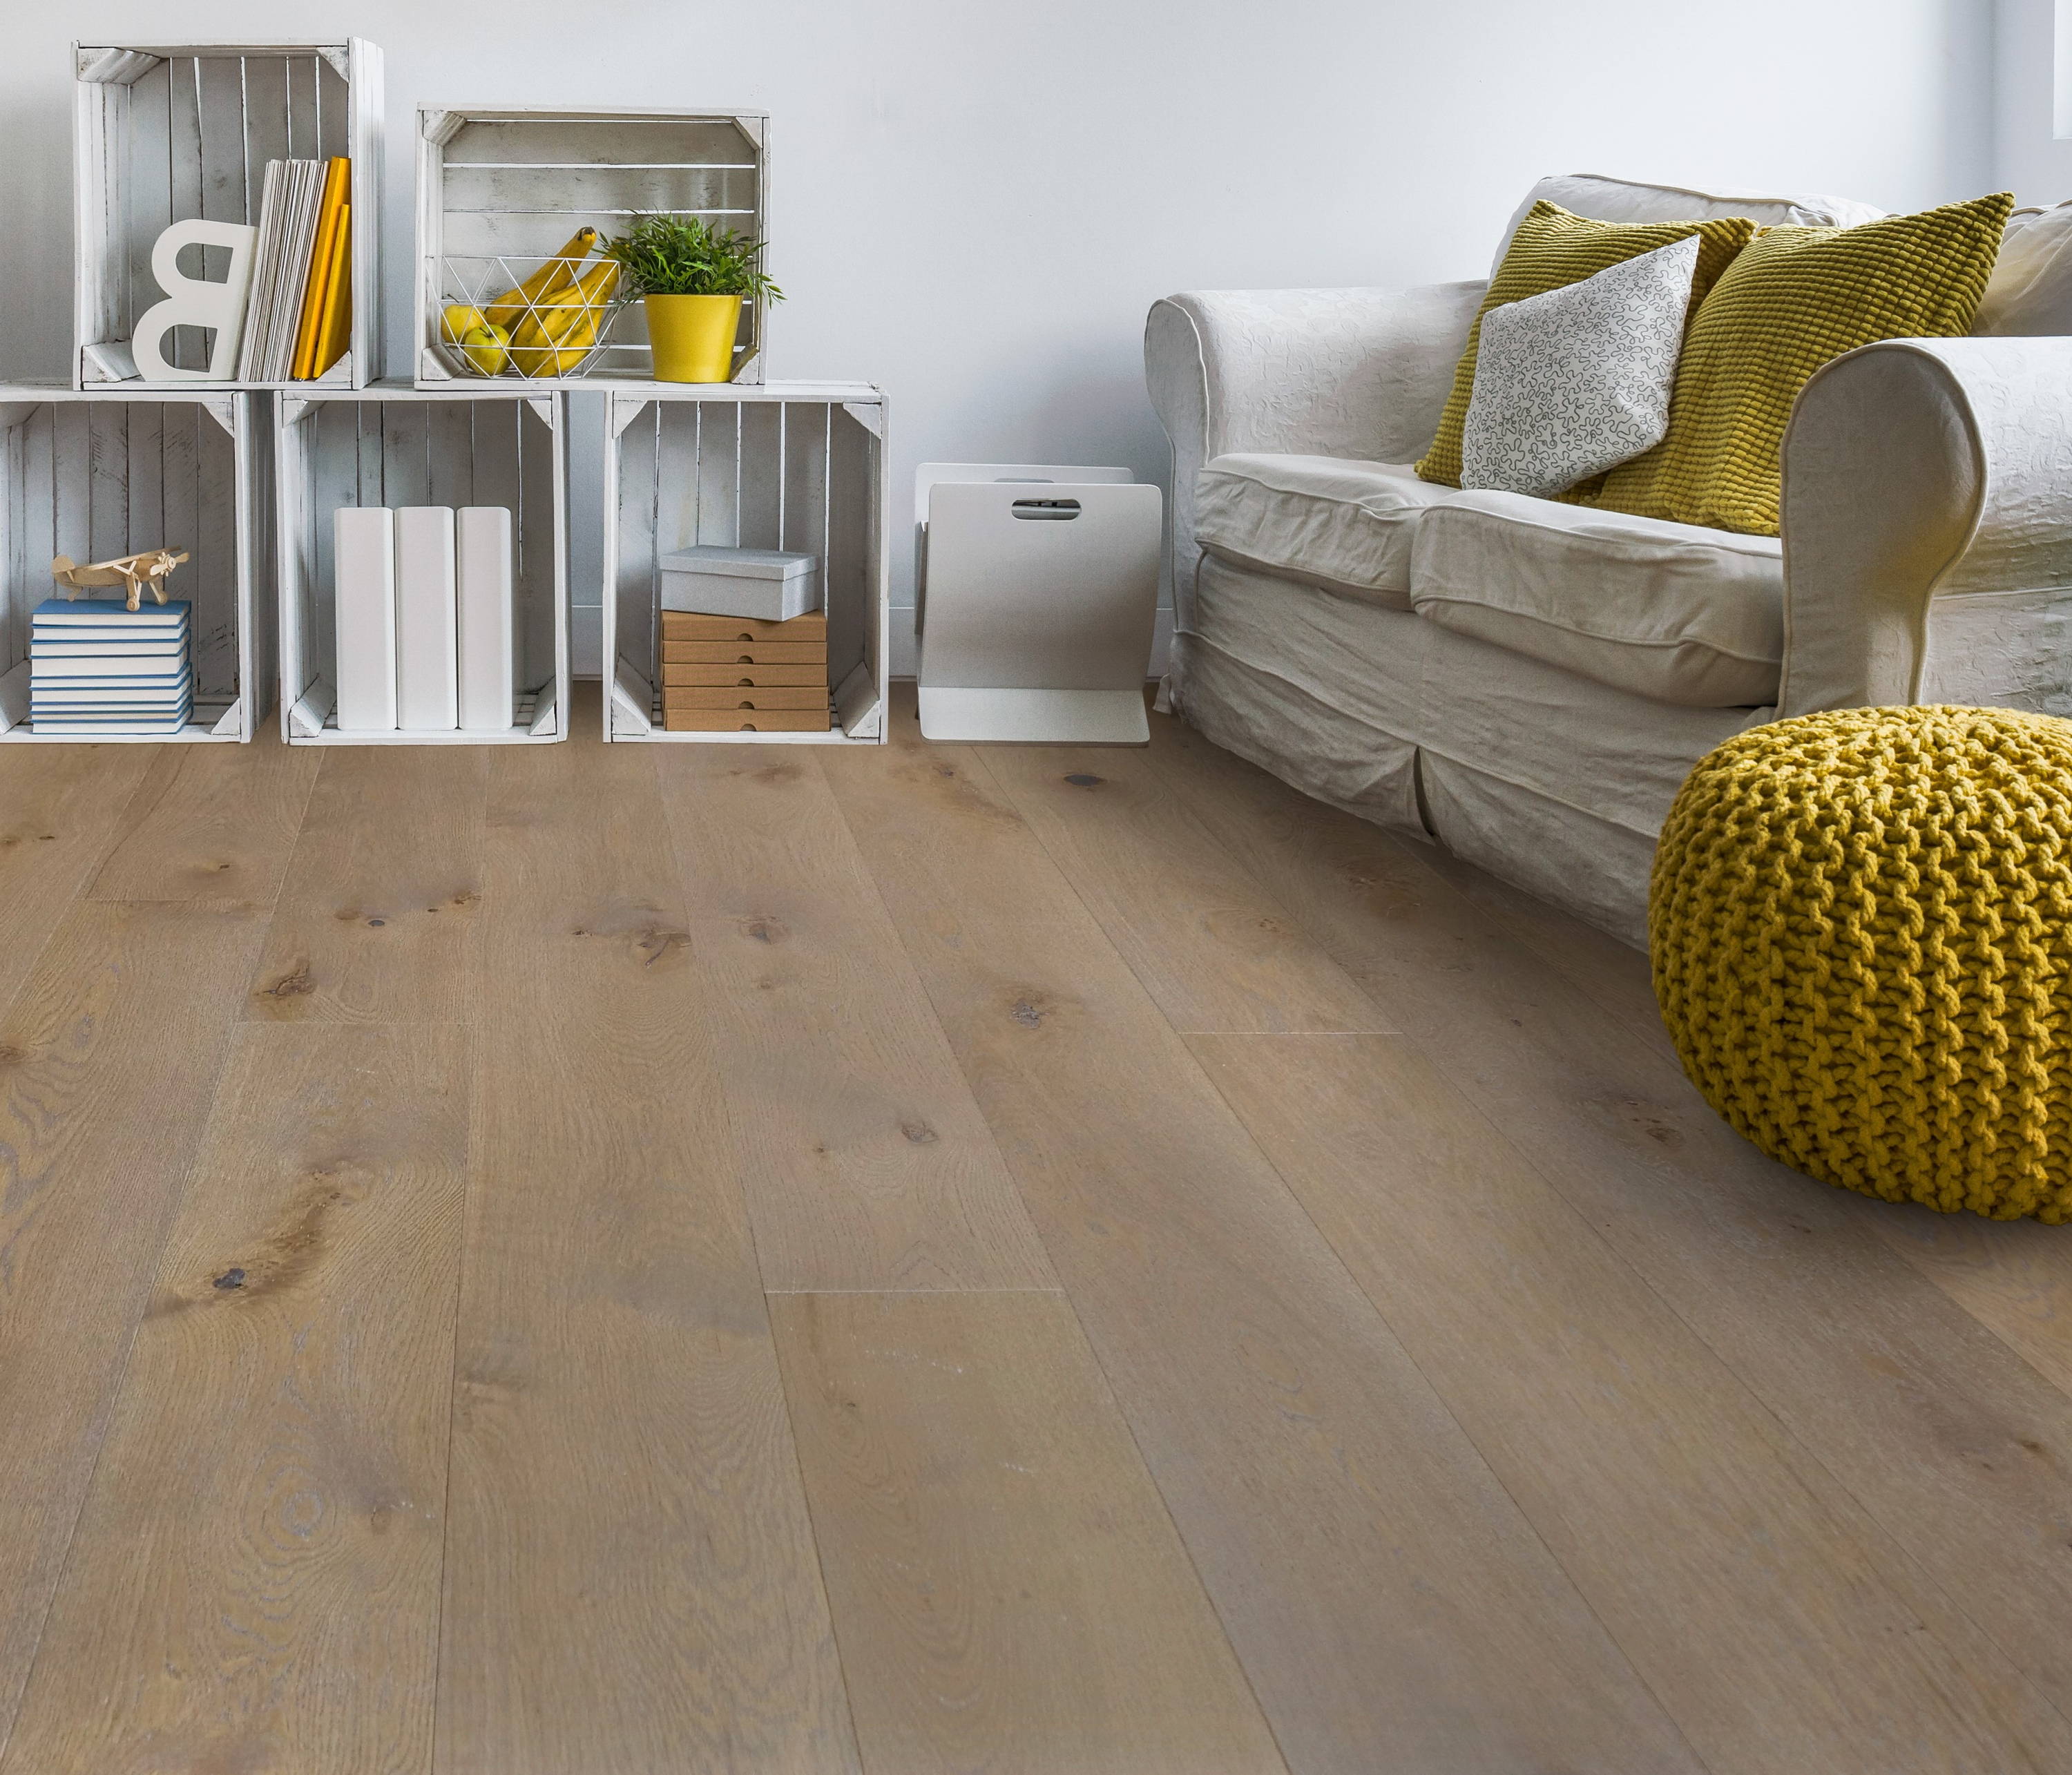 Hardwood Flooring Increase, All About Wood Hardwood Floors Increase Home Value